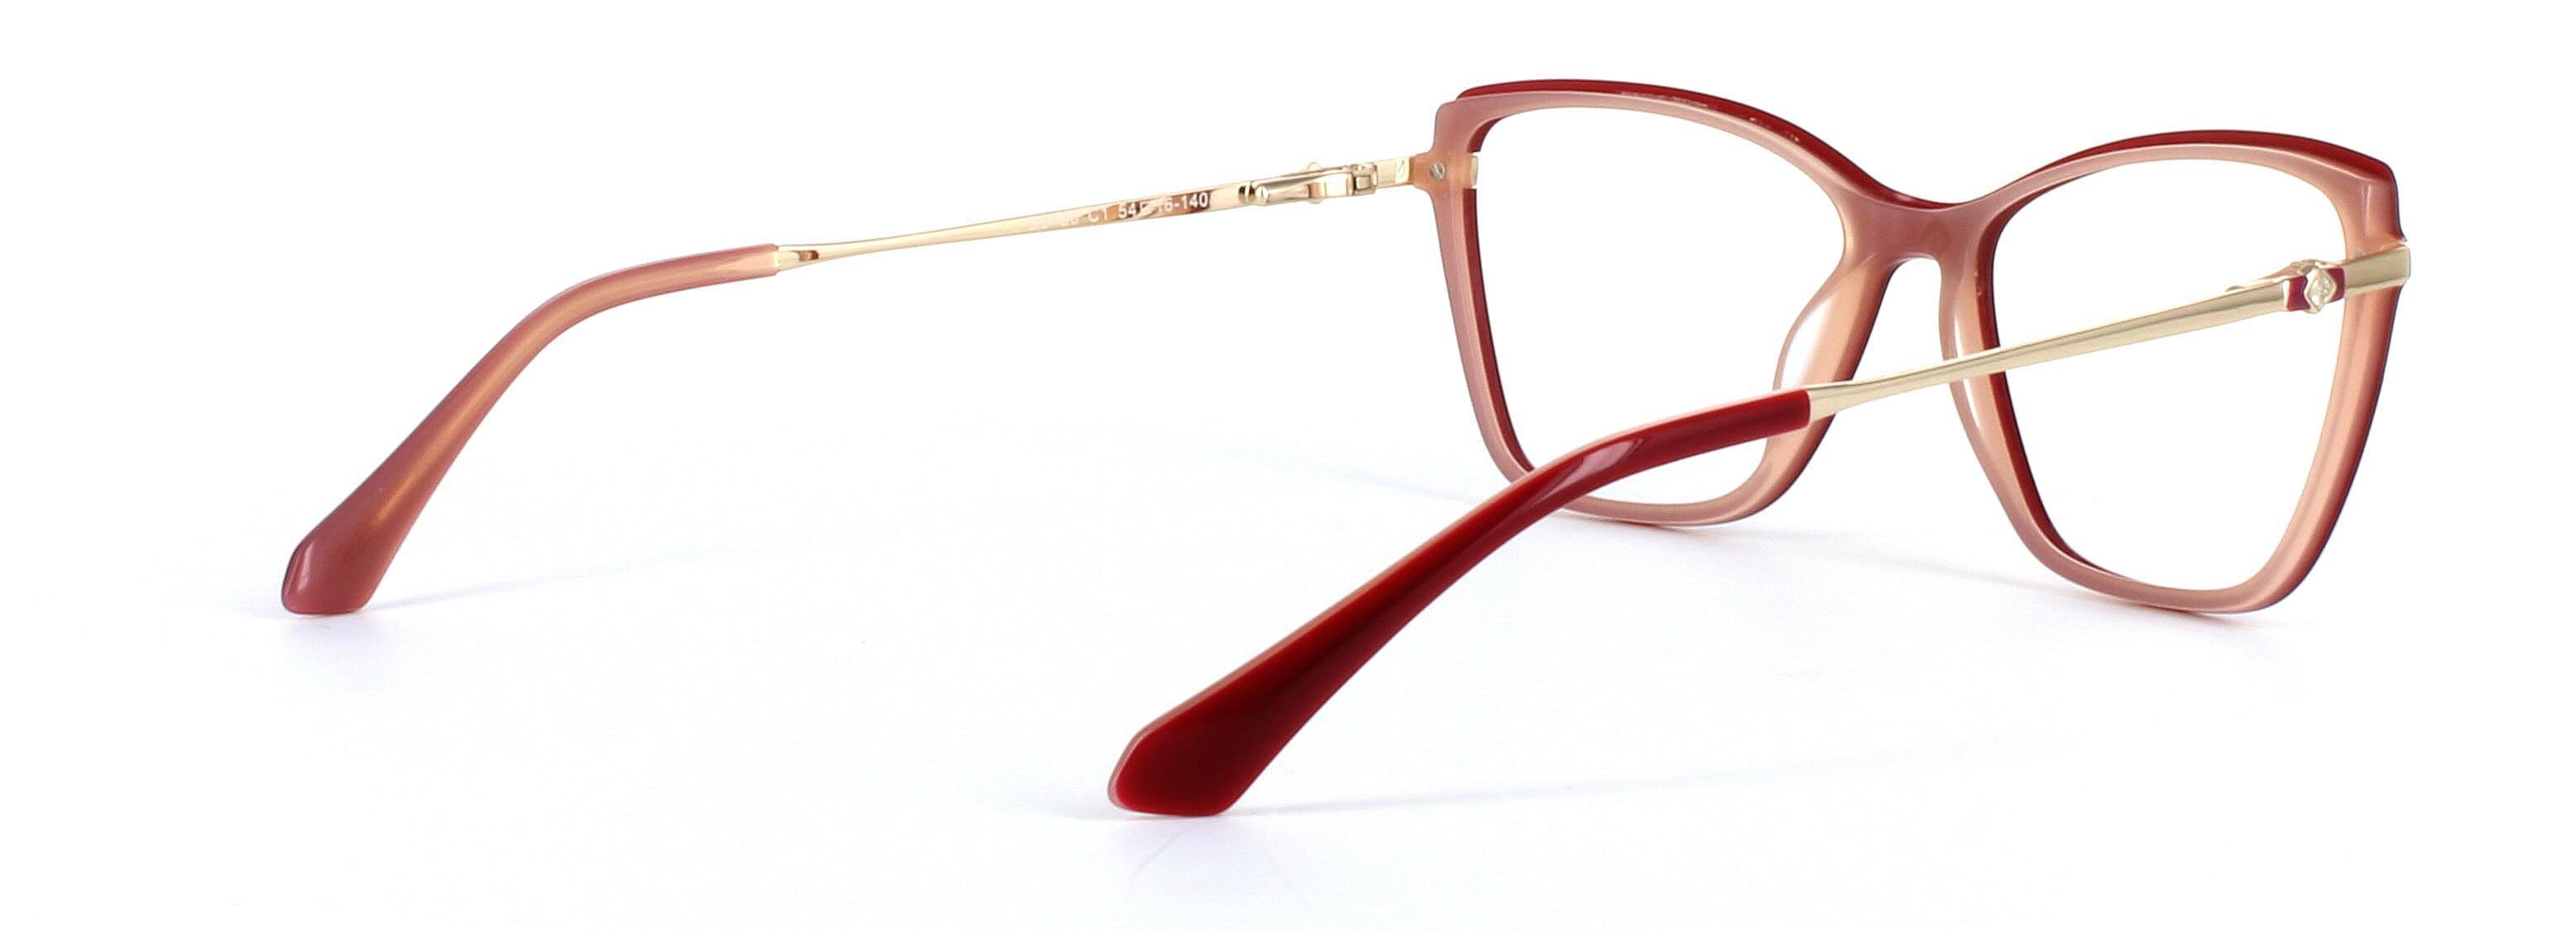 Jeanine Red Full Rim Acetate Glasses - Image View 4